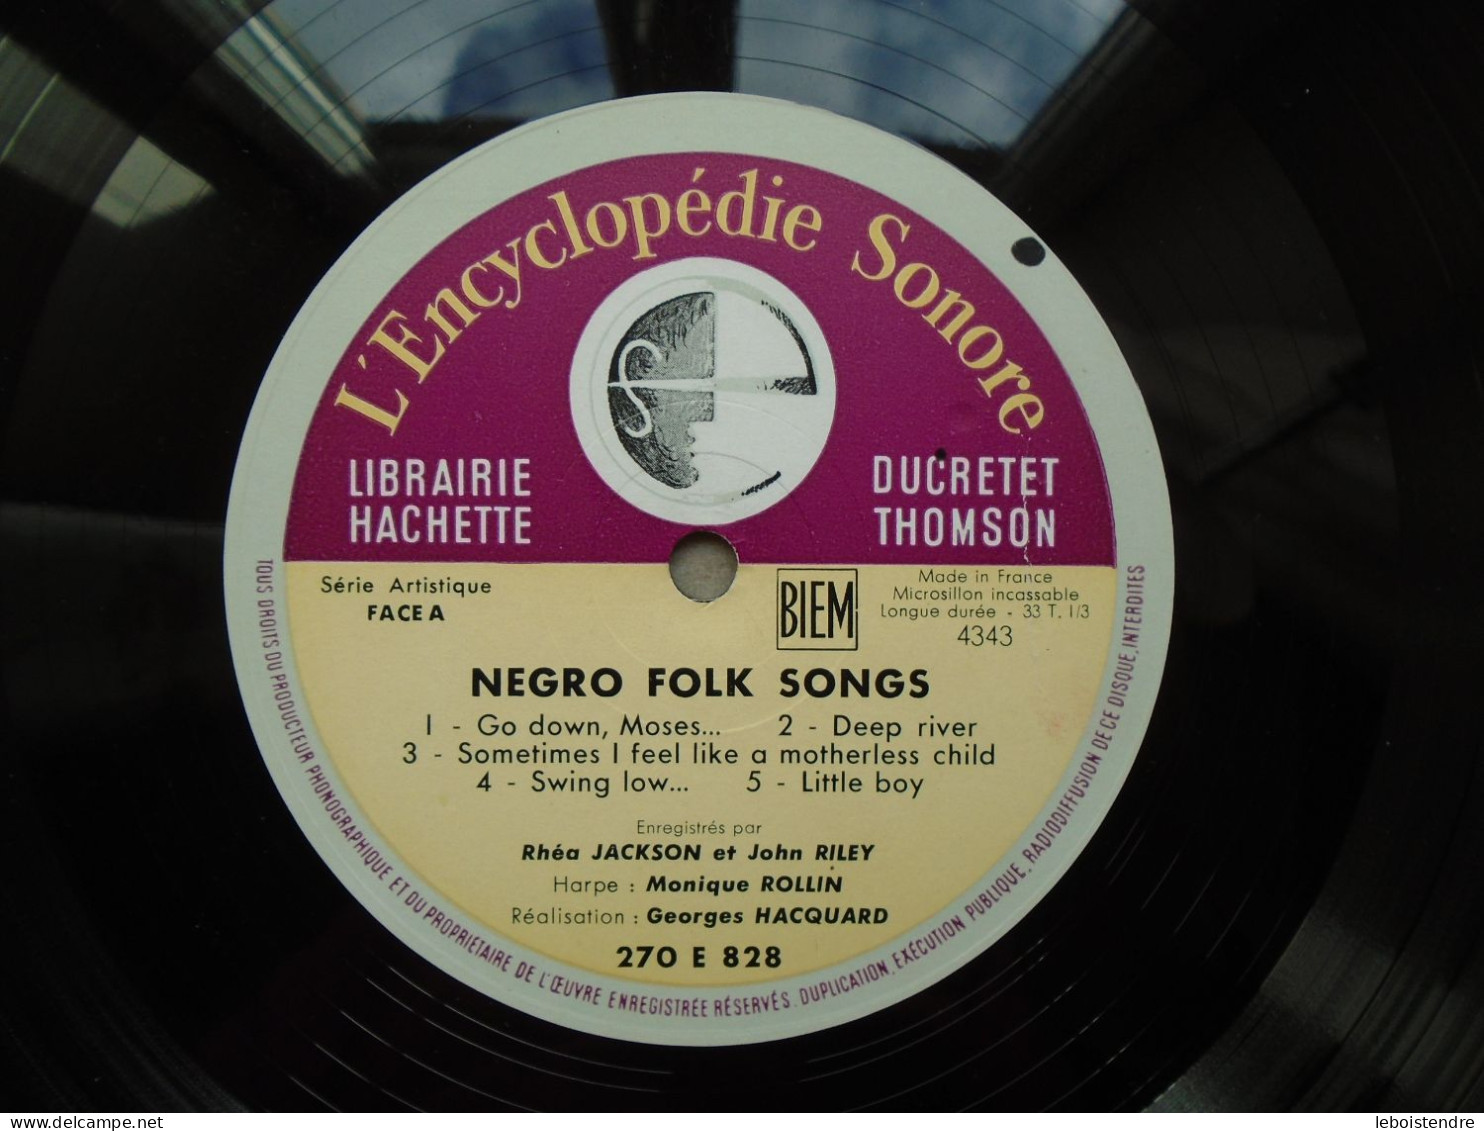 10" VINYLE NEGRO FOLK SONGS 270E828 + LIVRET L ENCYCLOPEDIE SONORE LIBRAIRIE HACHETTE RHEA JACKSON JOHN RILEY - Formatos Especiales